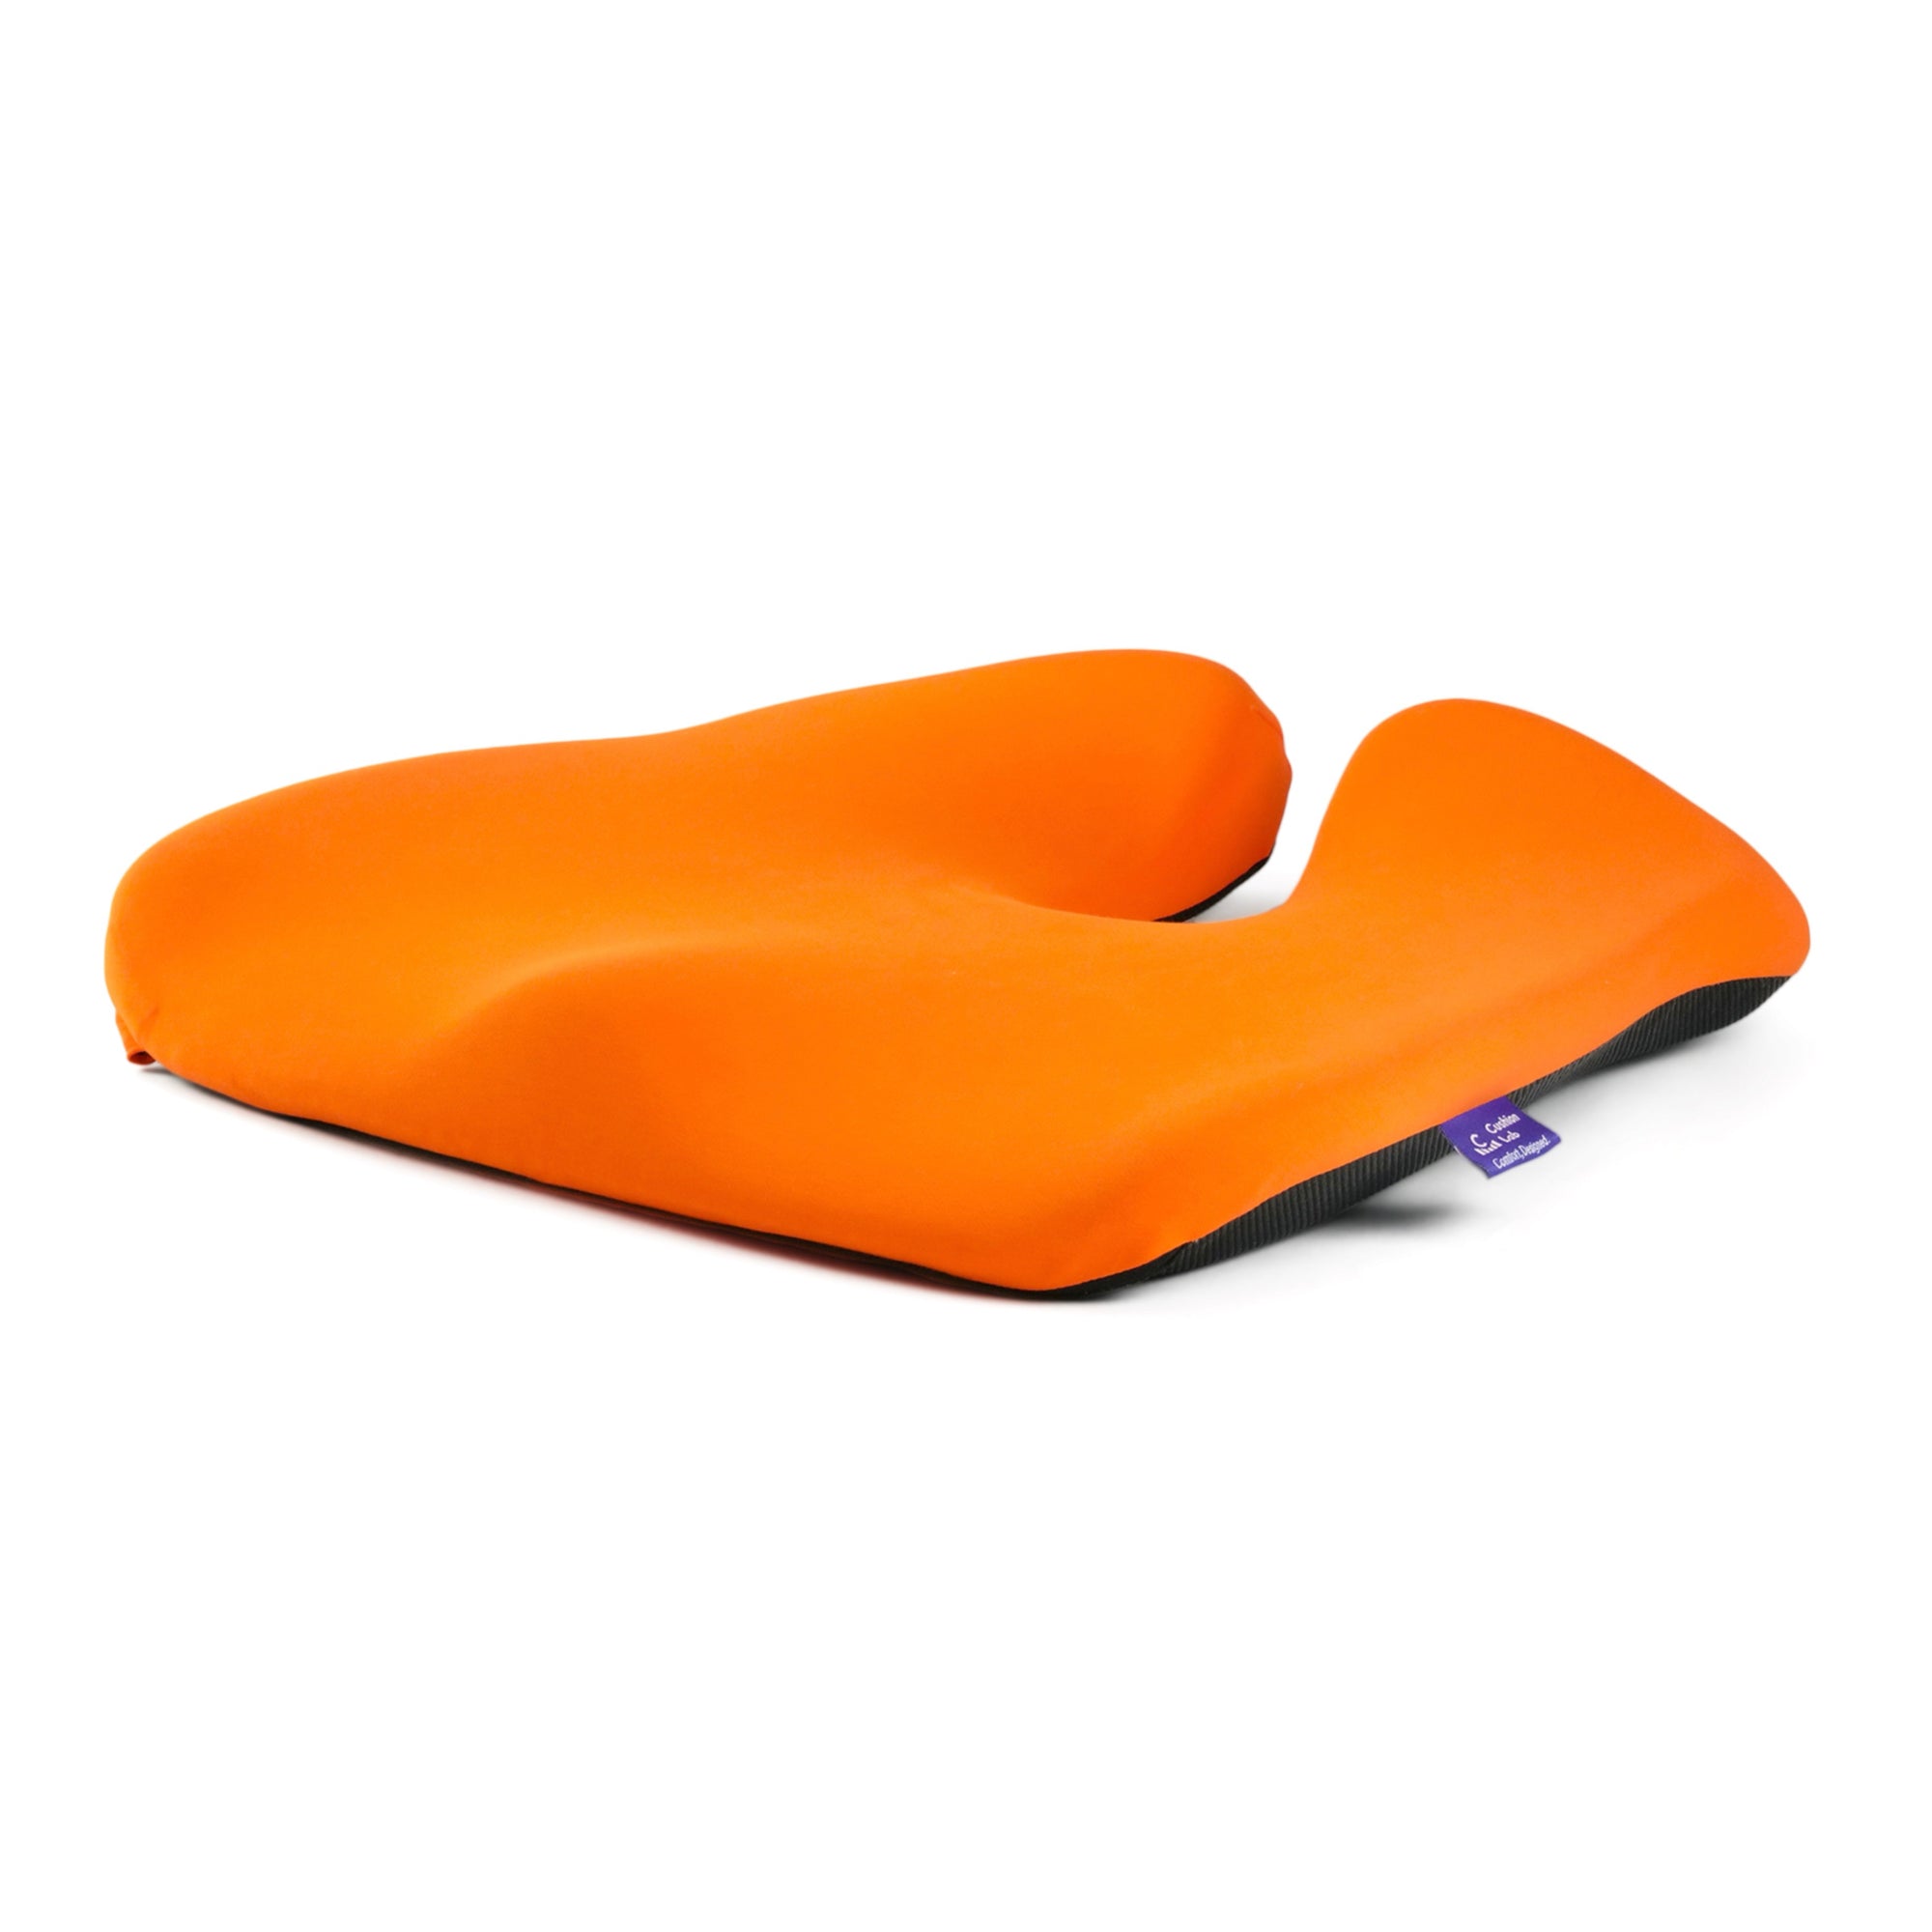 Cushion Lab Pressure Relief Seat Cushion - Pink - Standard